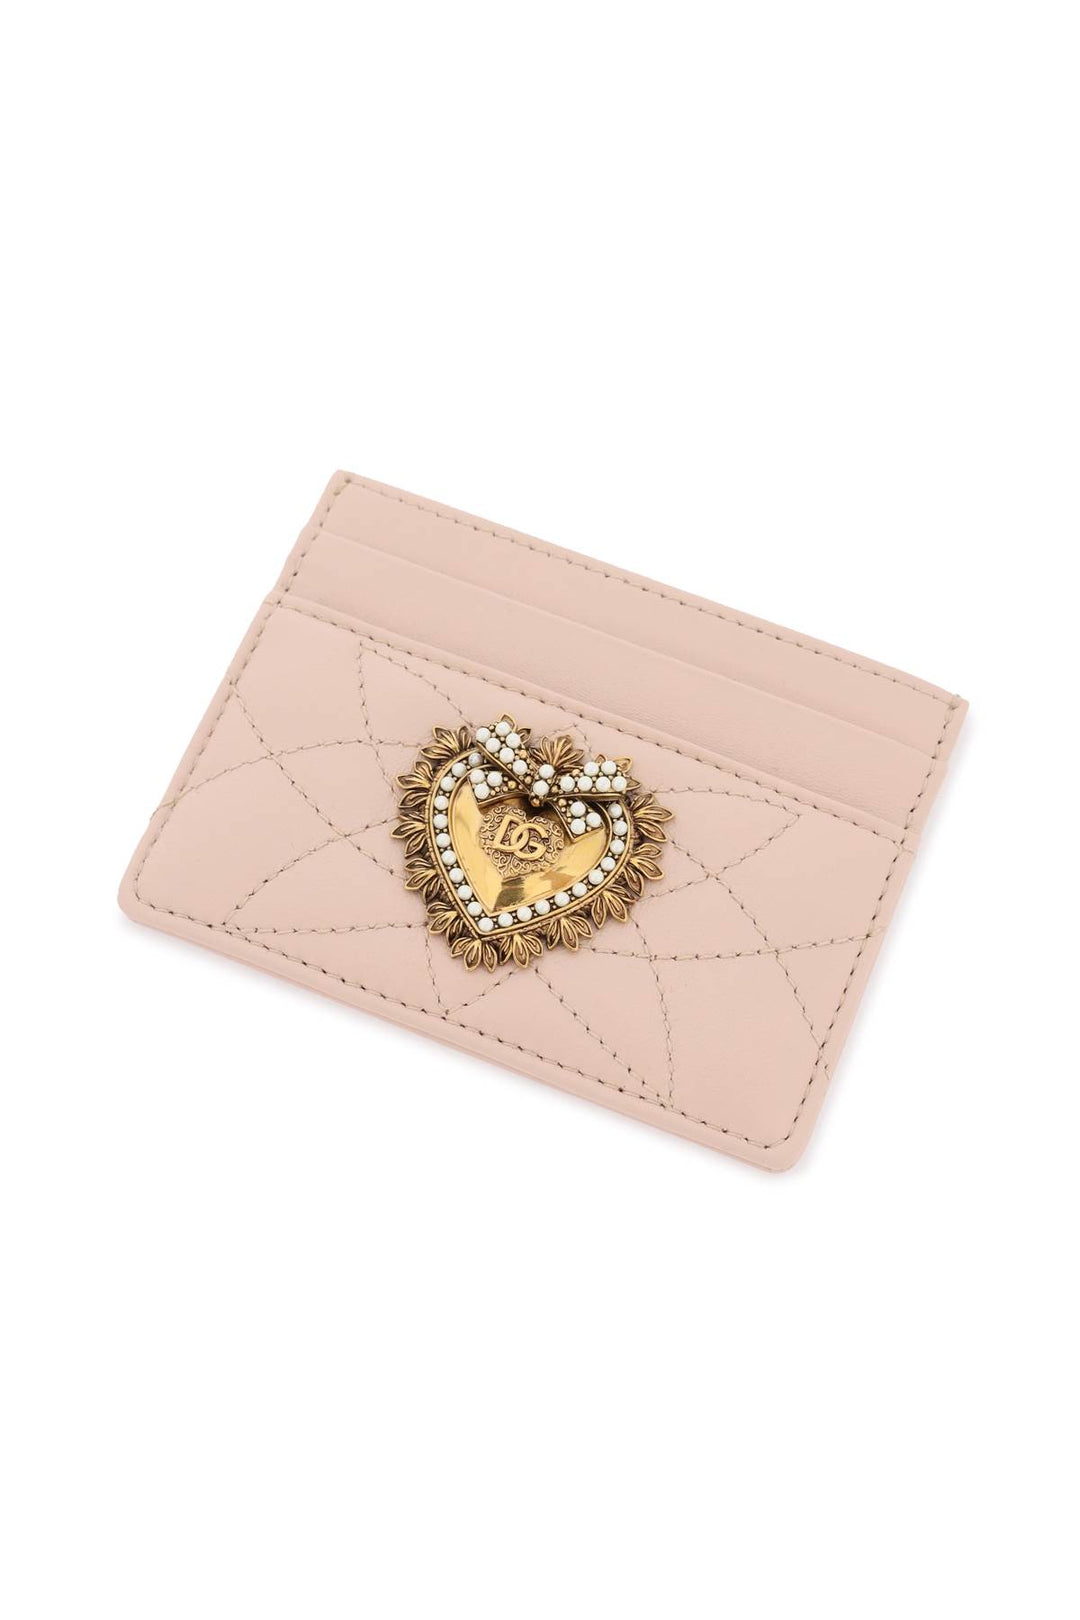 Dolce & Gabbana 'Devotion' Cardholder   Pink